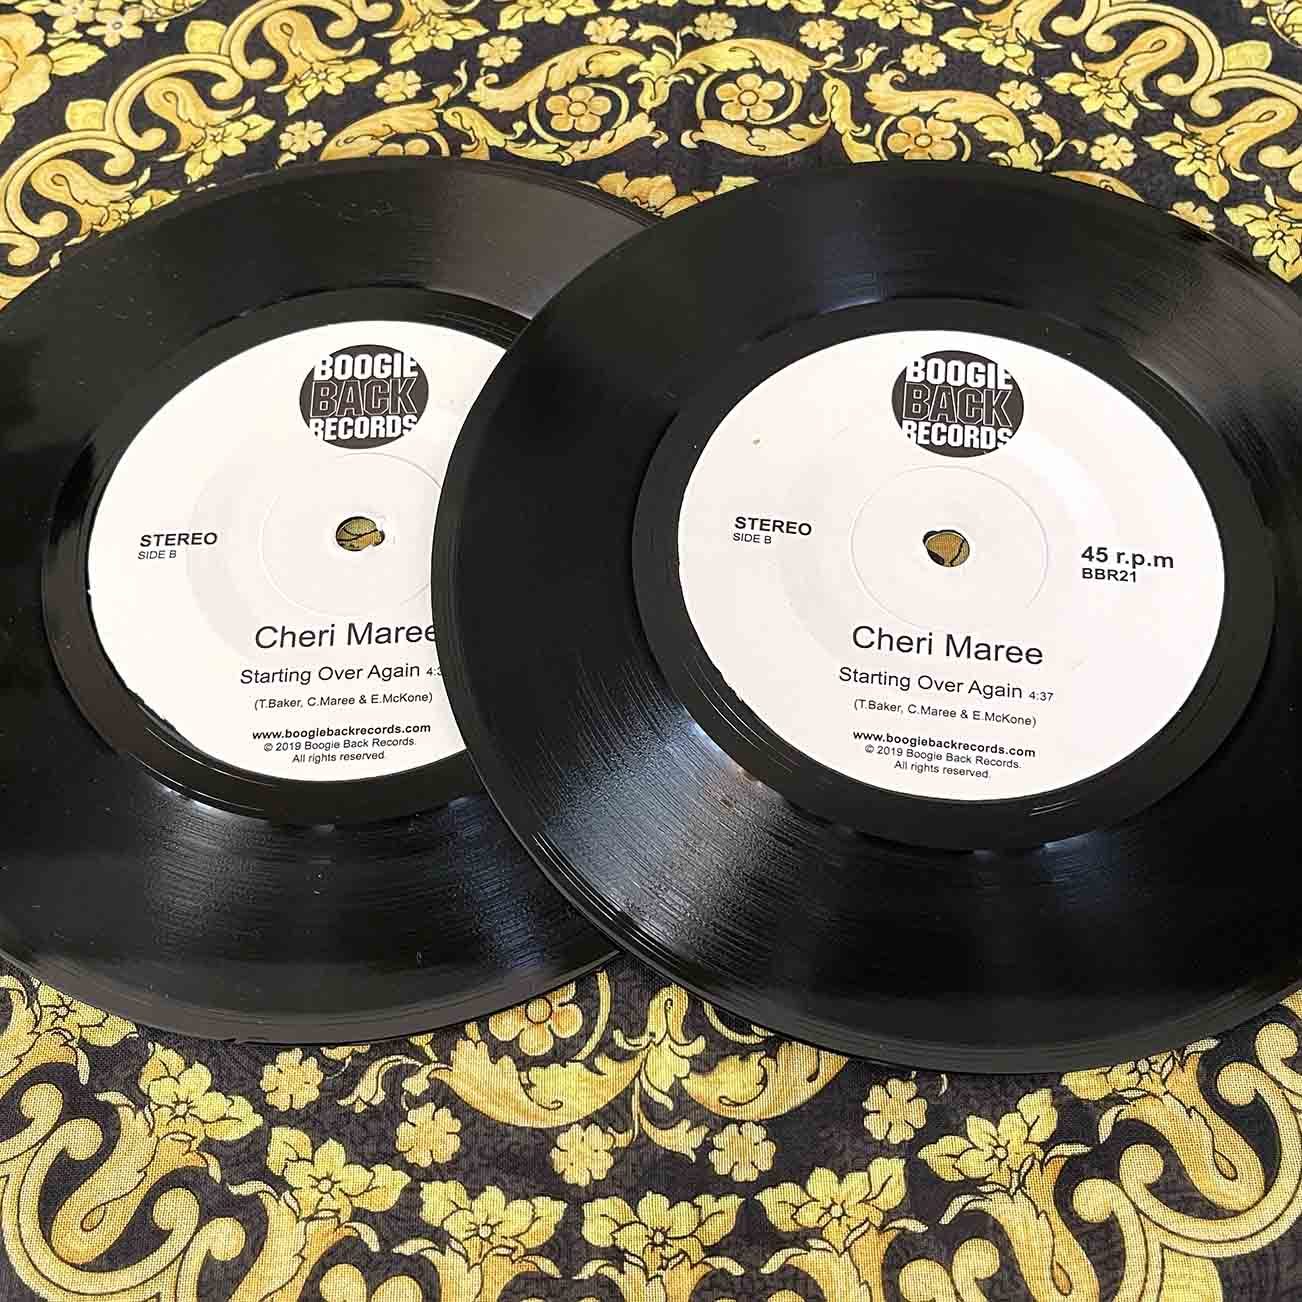 Cheri Maree – I Want You Back 02